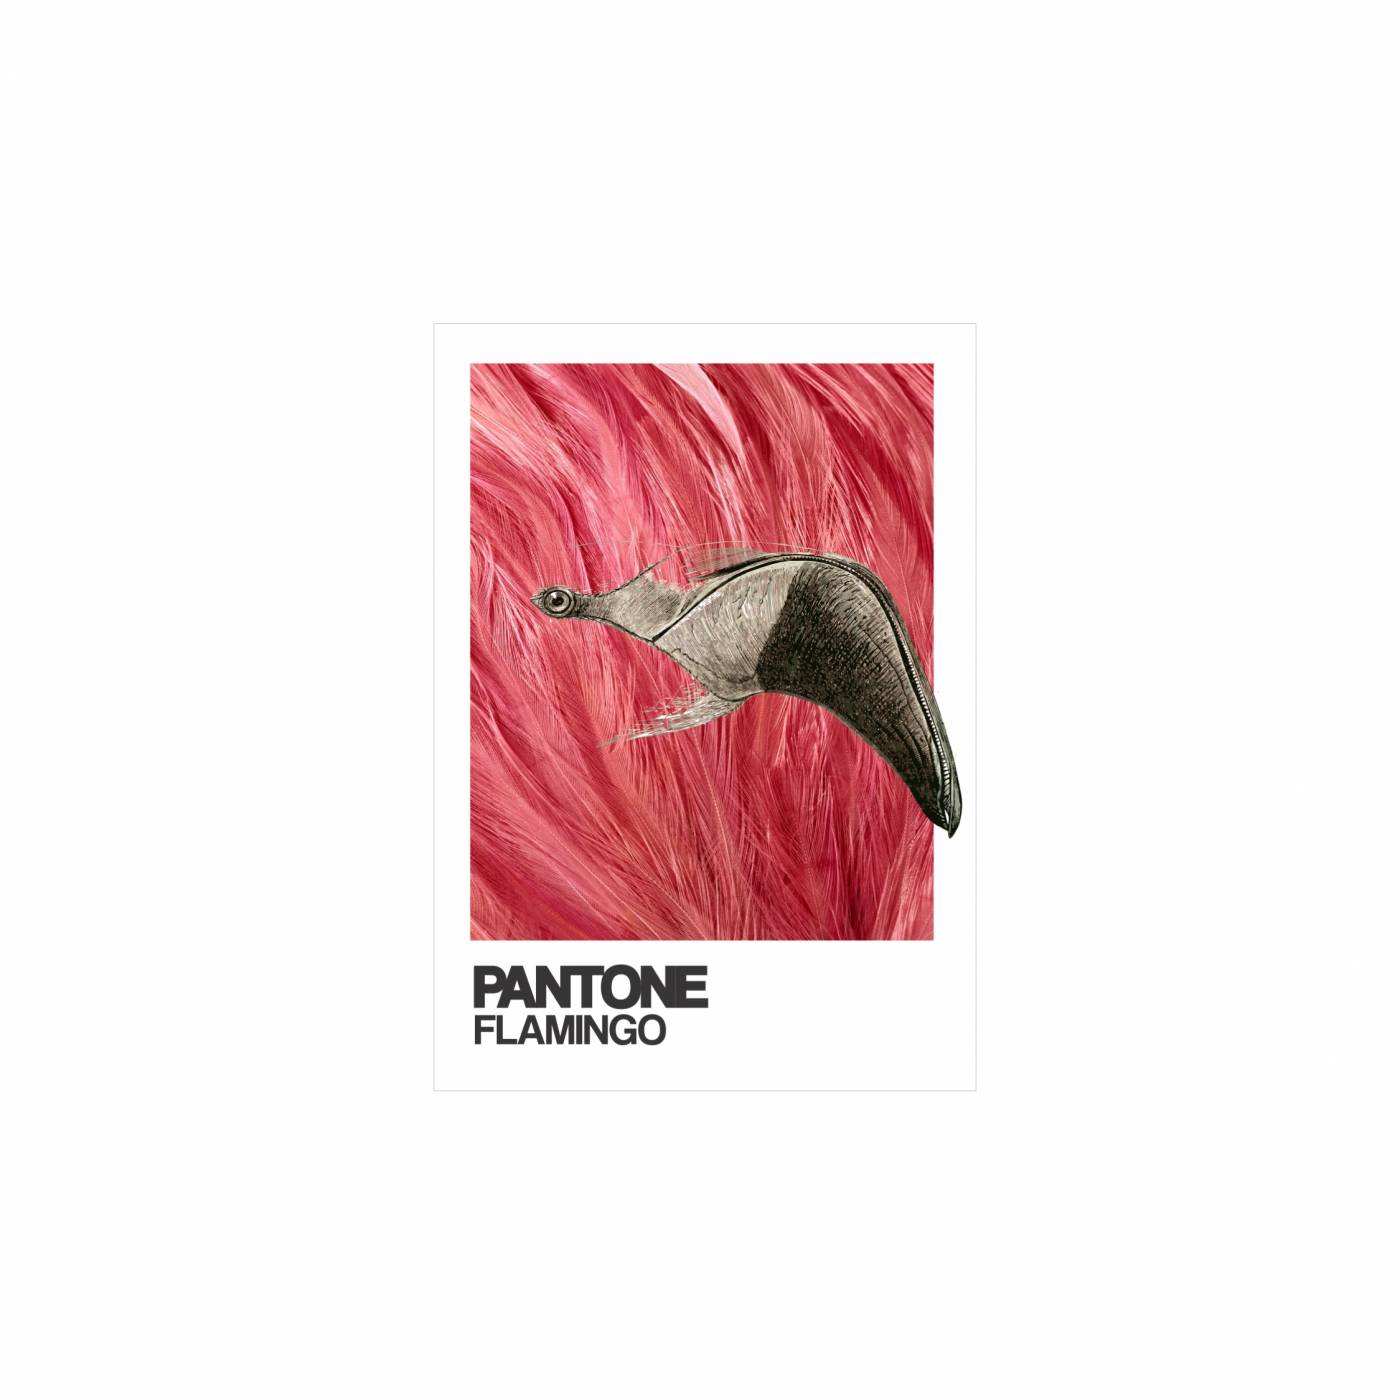 Pantone flamingo